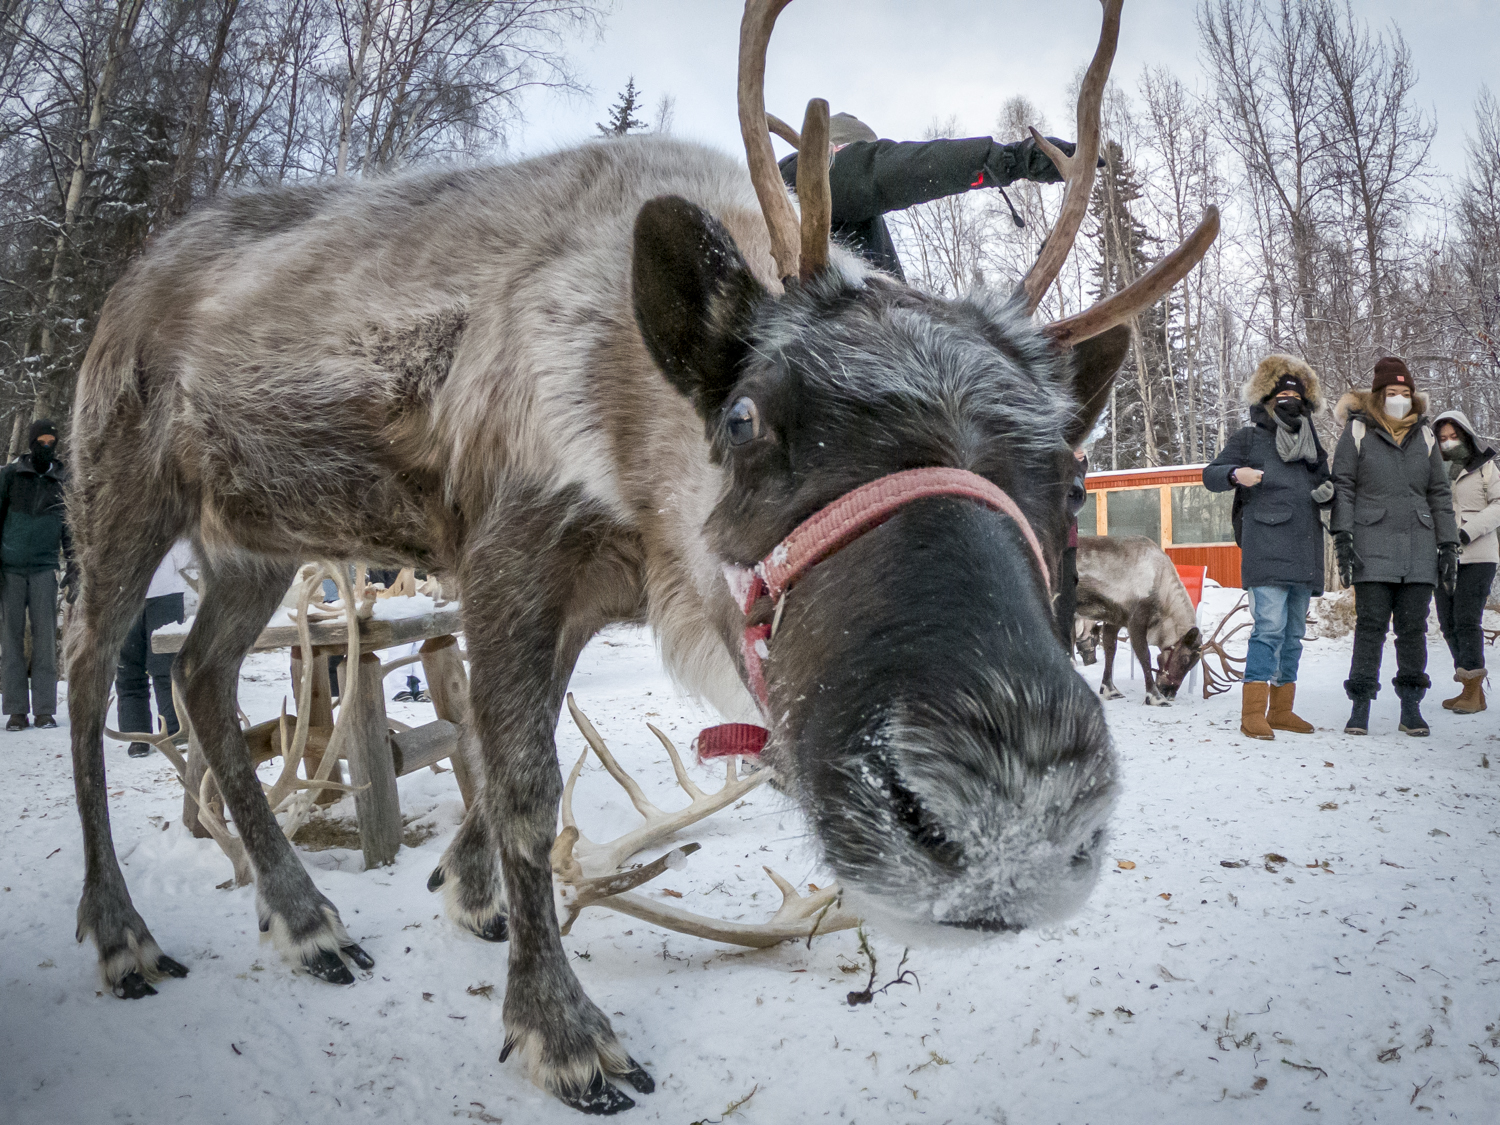 visit to the reindeer farm in Fairbanks